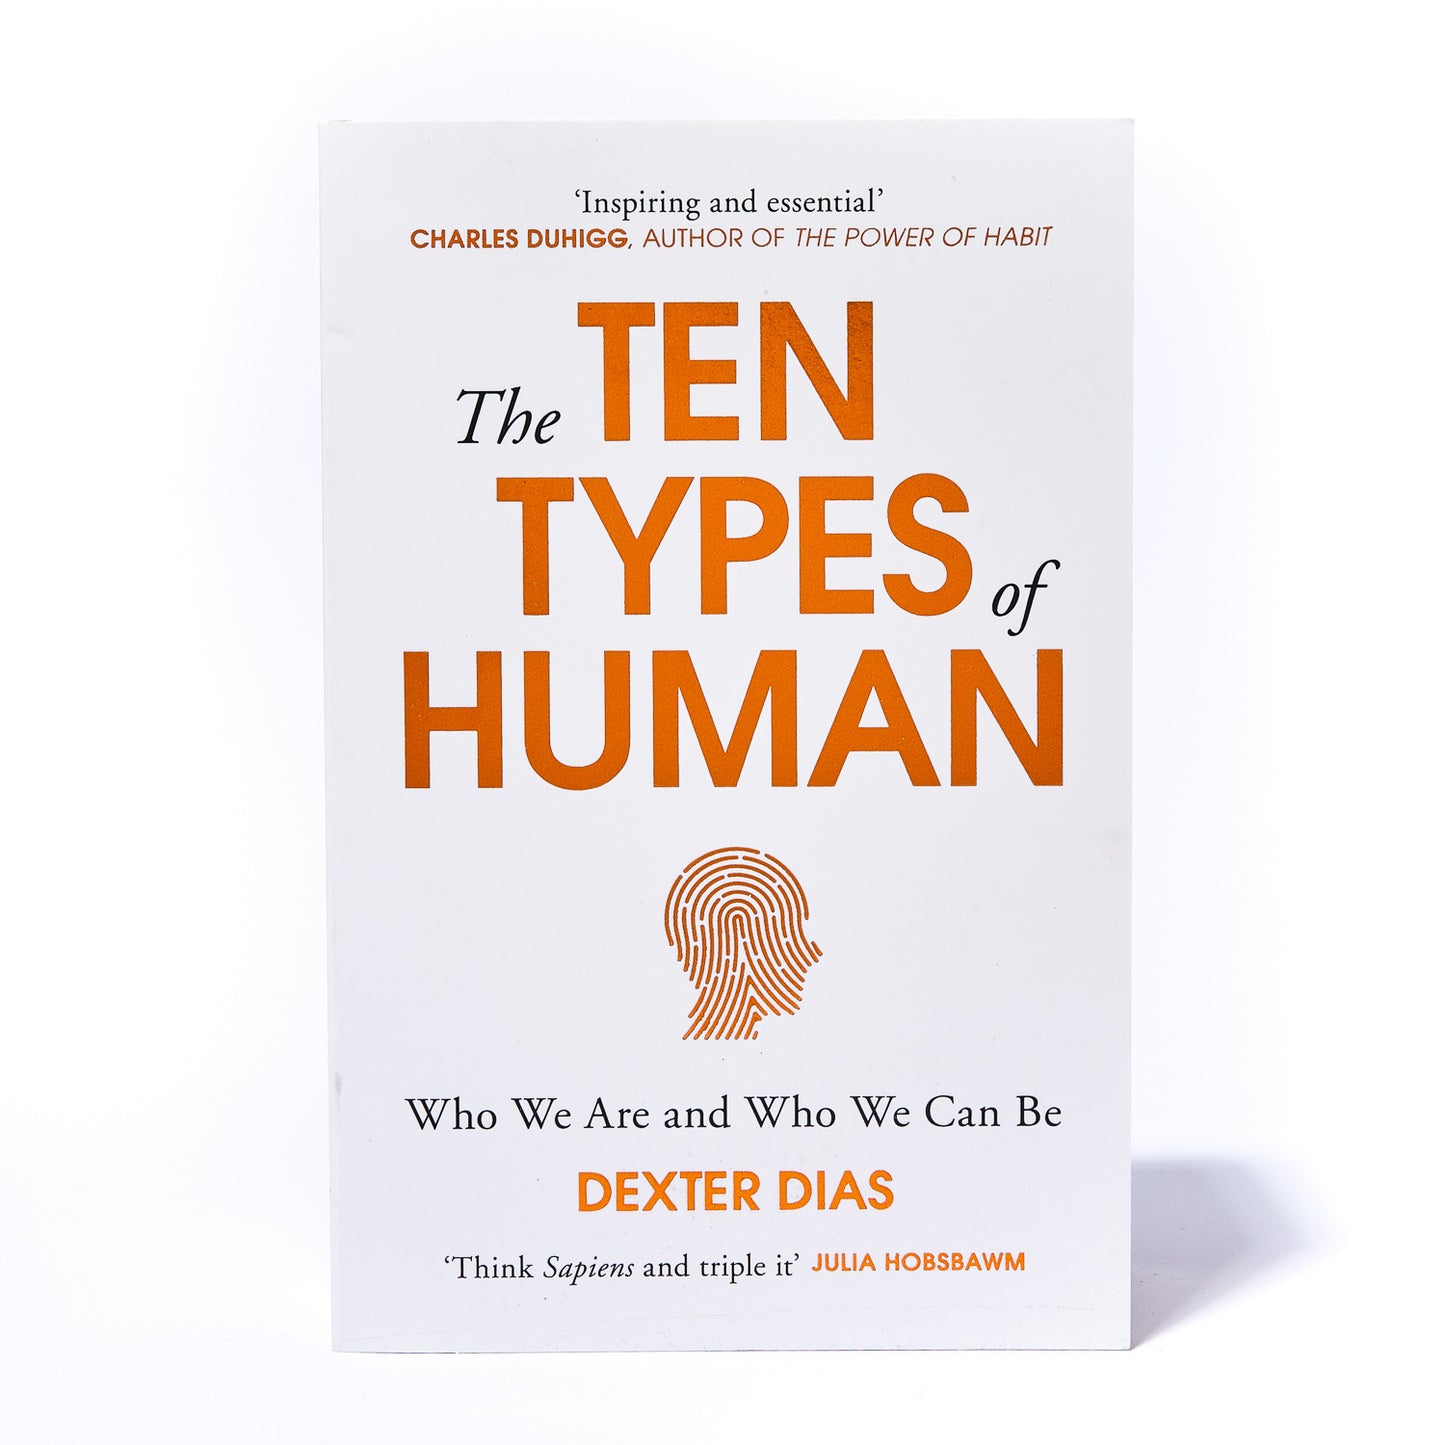 THE TEN TYPES OF HUMAN